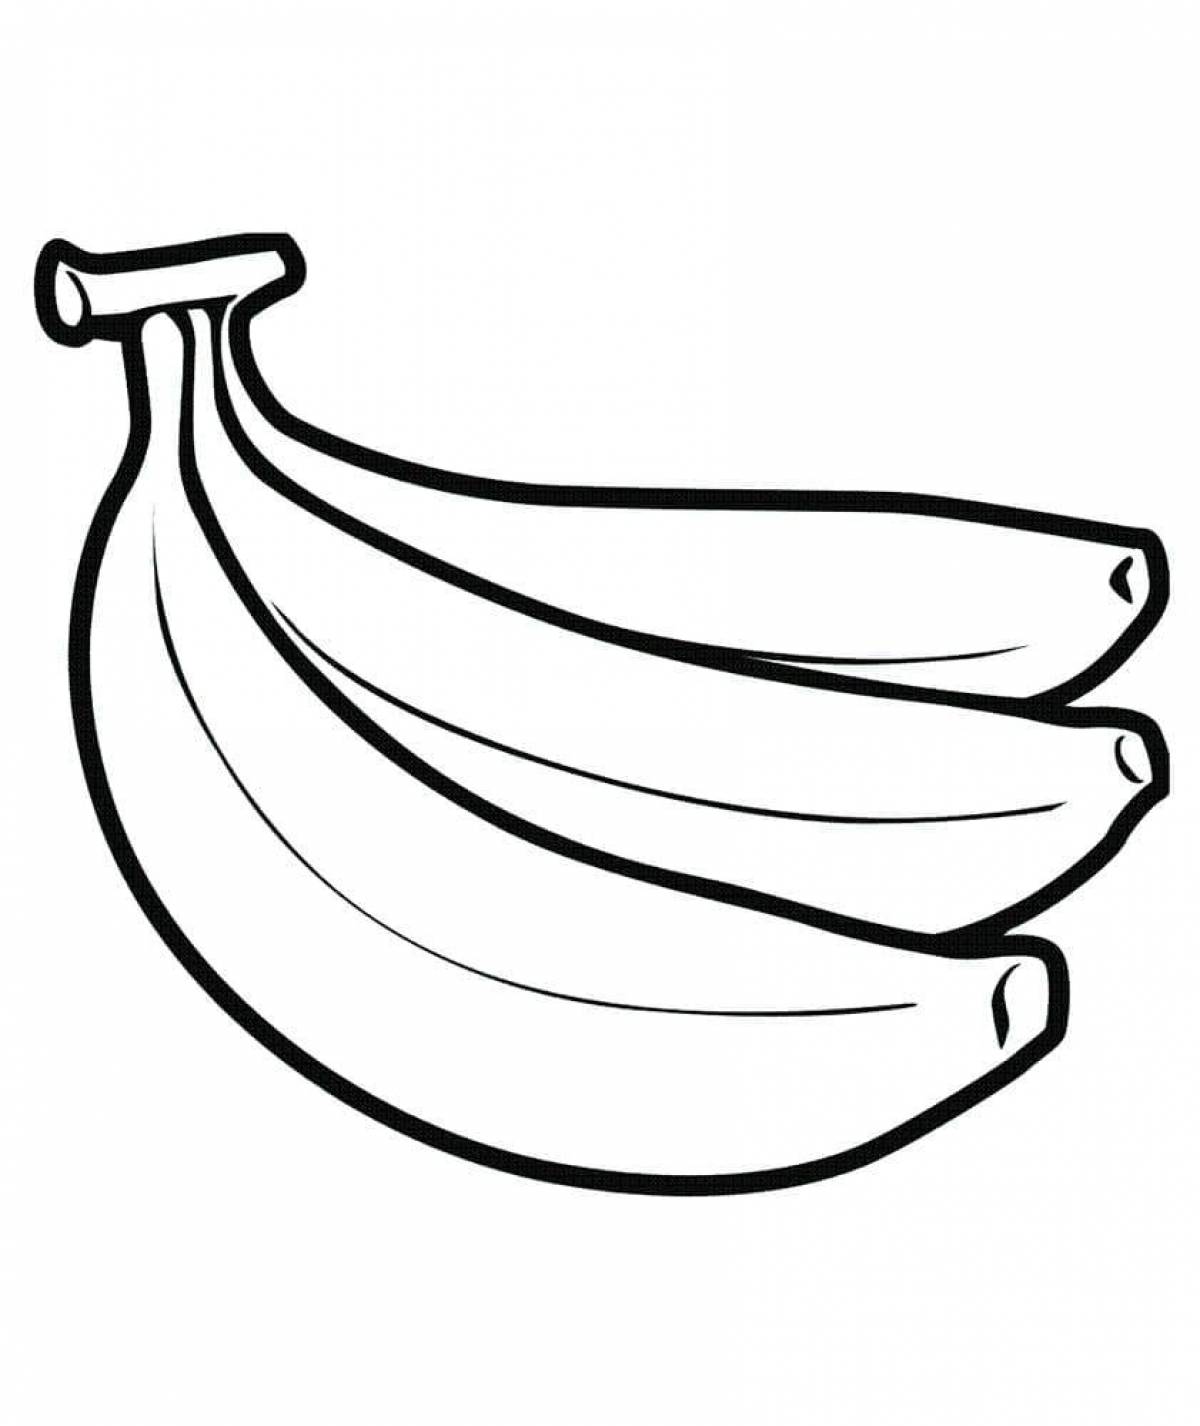 Красочная банановая раскраска для детей